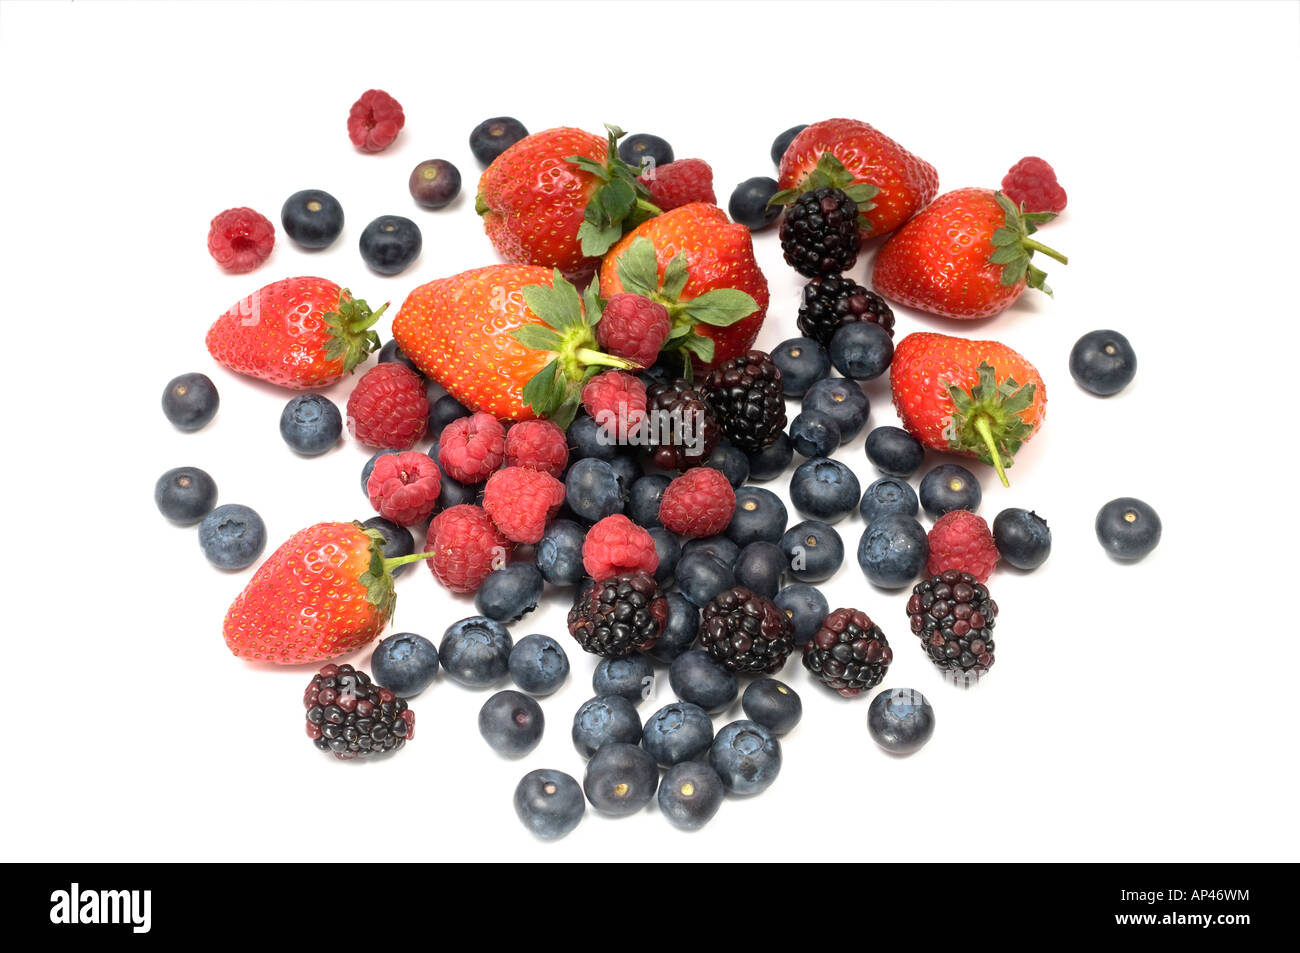 Mixed fruit on a white background Stock Photo